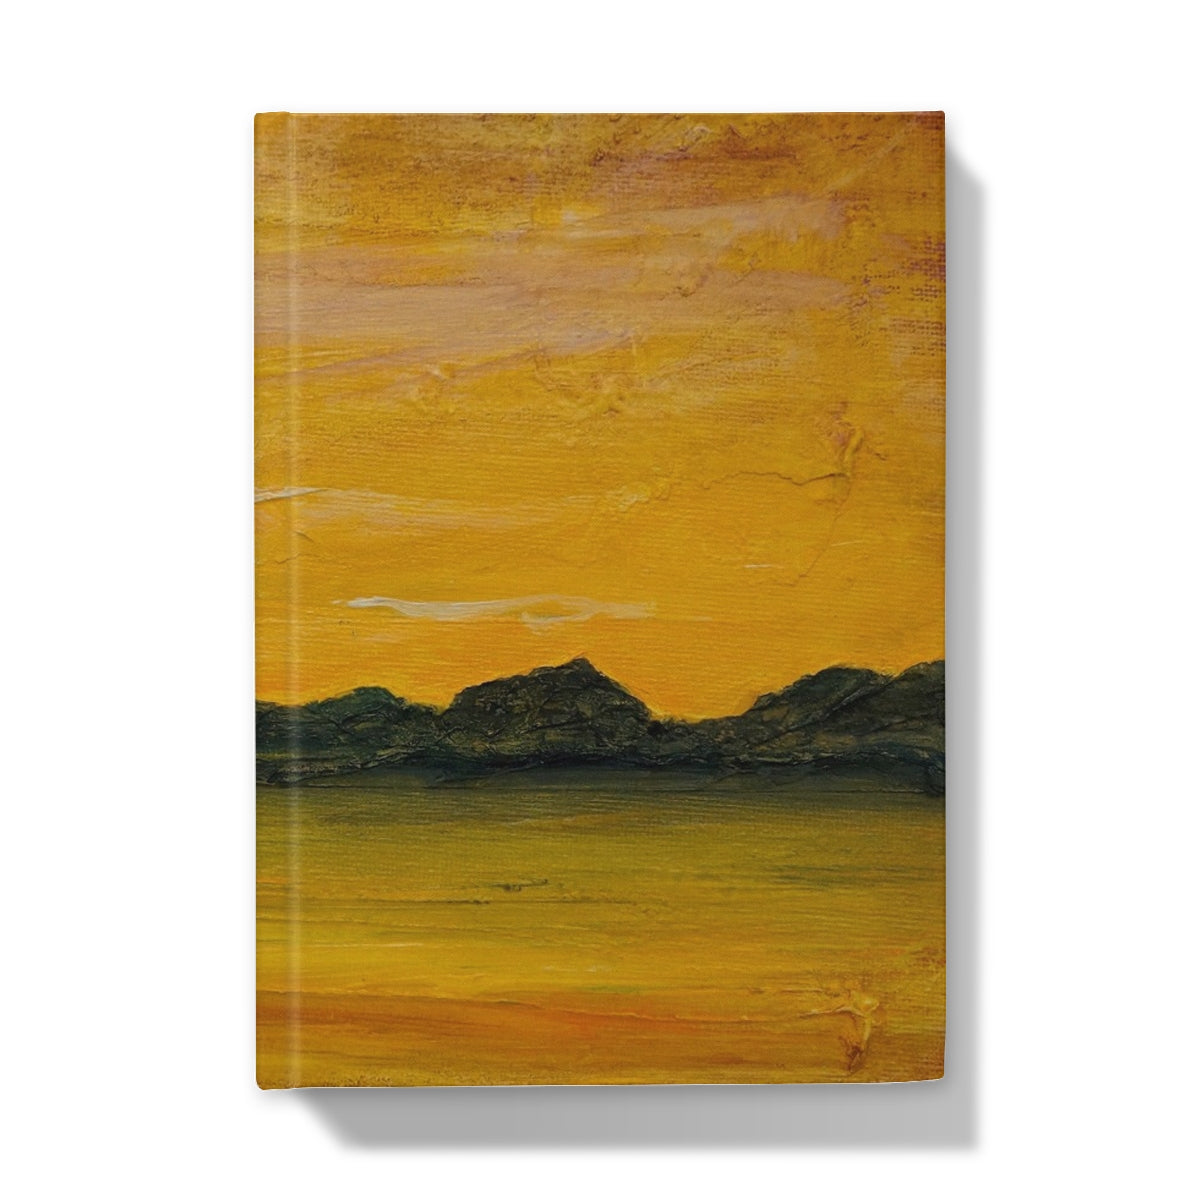 Jura Sunset Art Gifts Hardback Journal-Journals & Notebooks-Hebridean Islands Art Gallery-A4-Lined-Paintings, Prints, Homeware, Art Gifts From Scotland By Scottish Artist Kevin Hunter